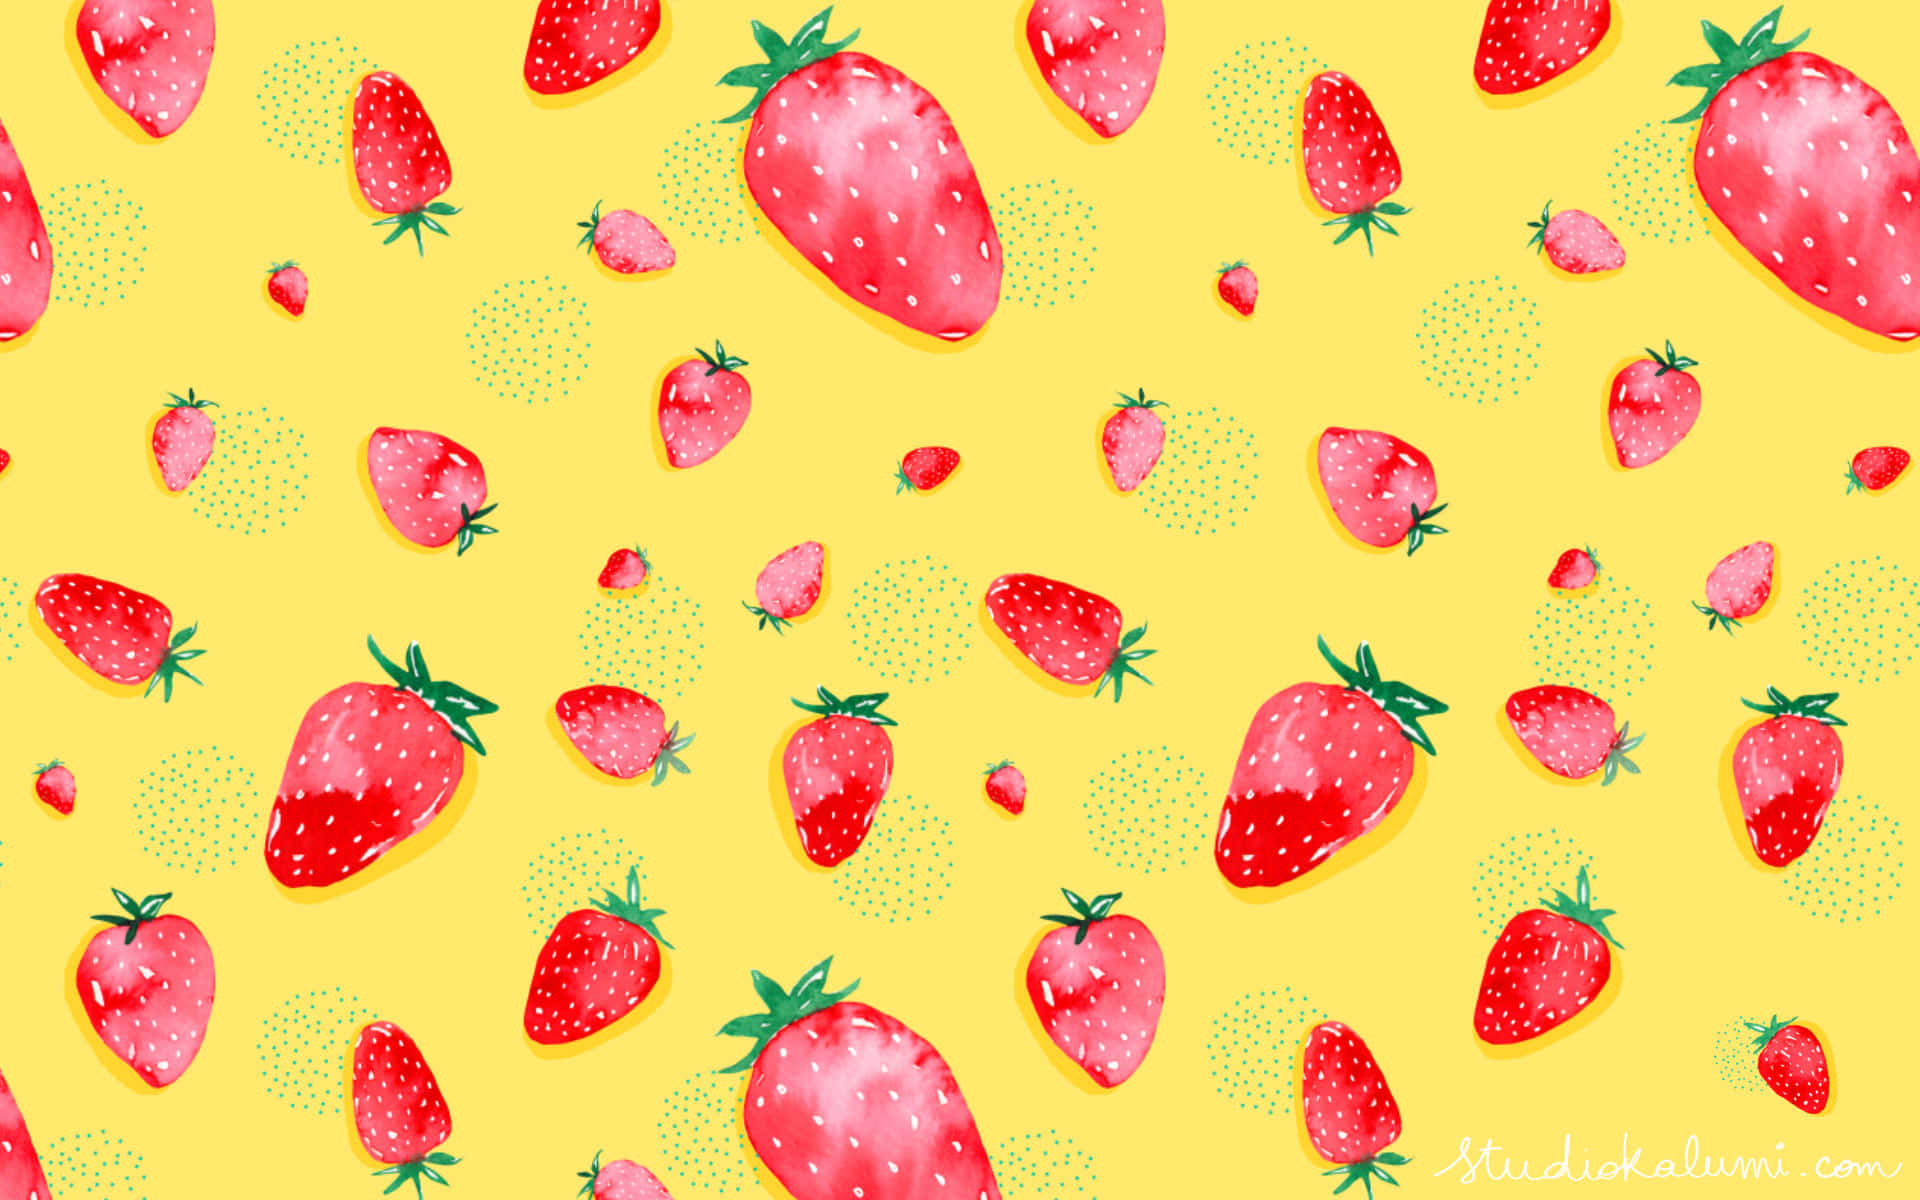 Strawberry Wallpaper - Hd Wallpapers Wallpaper